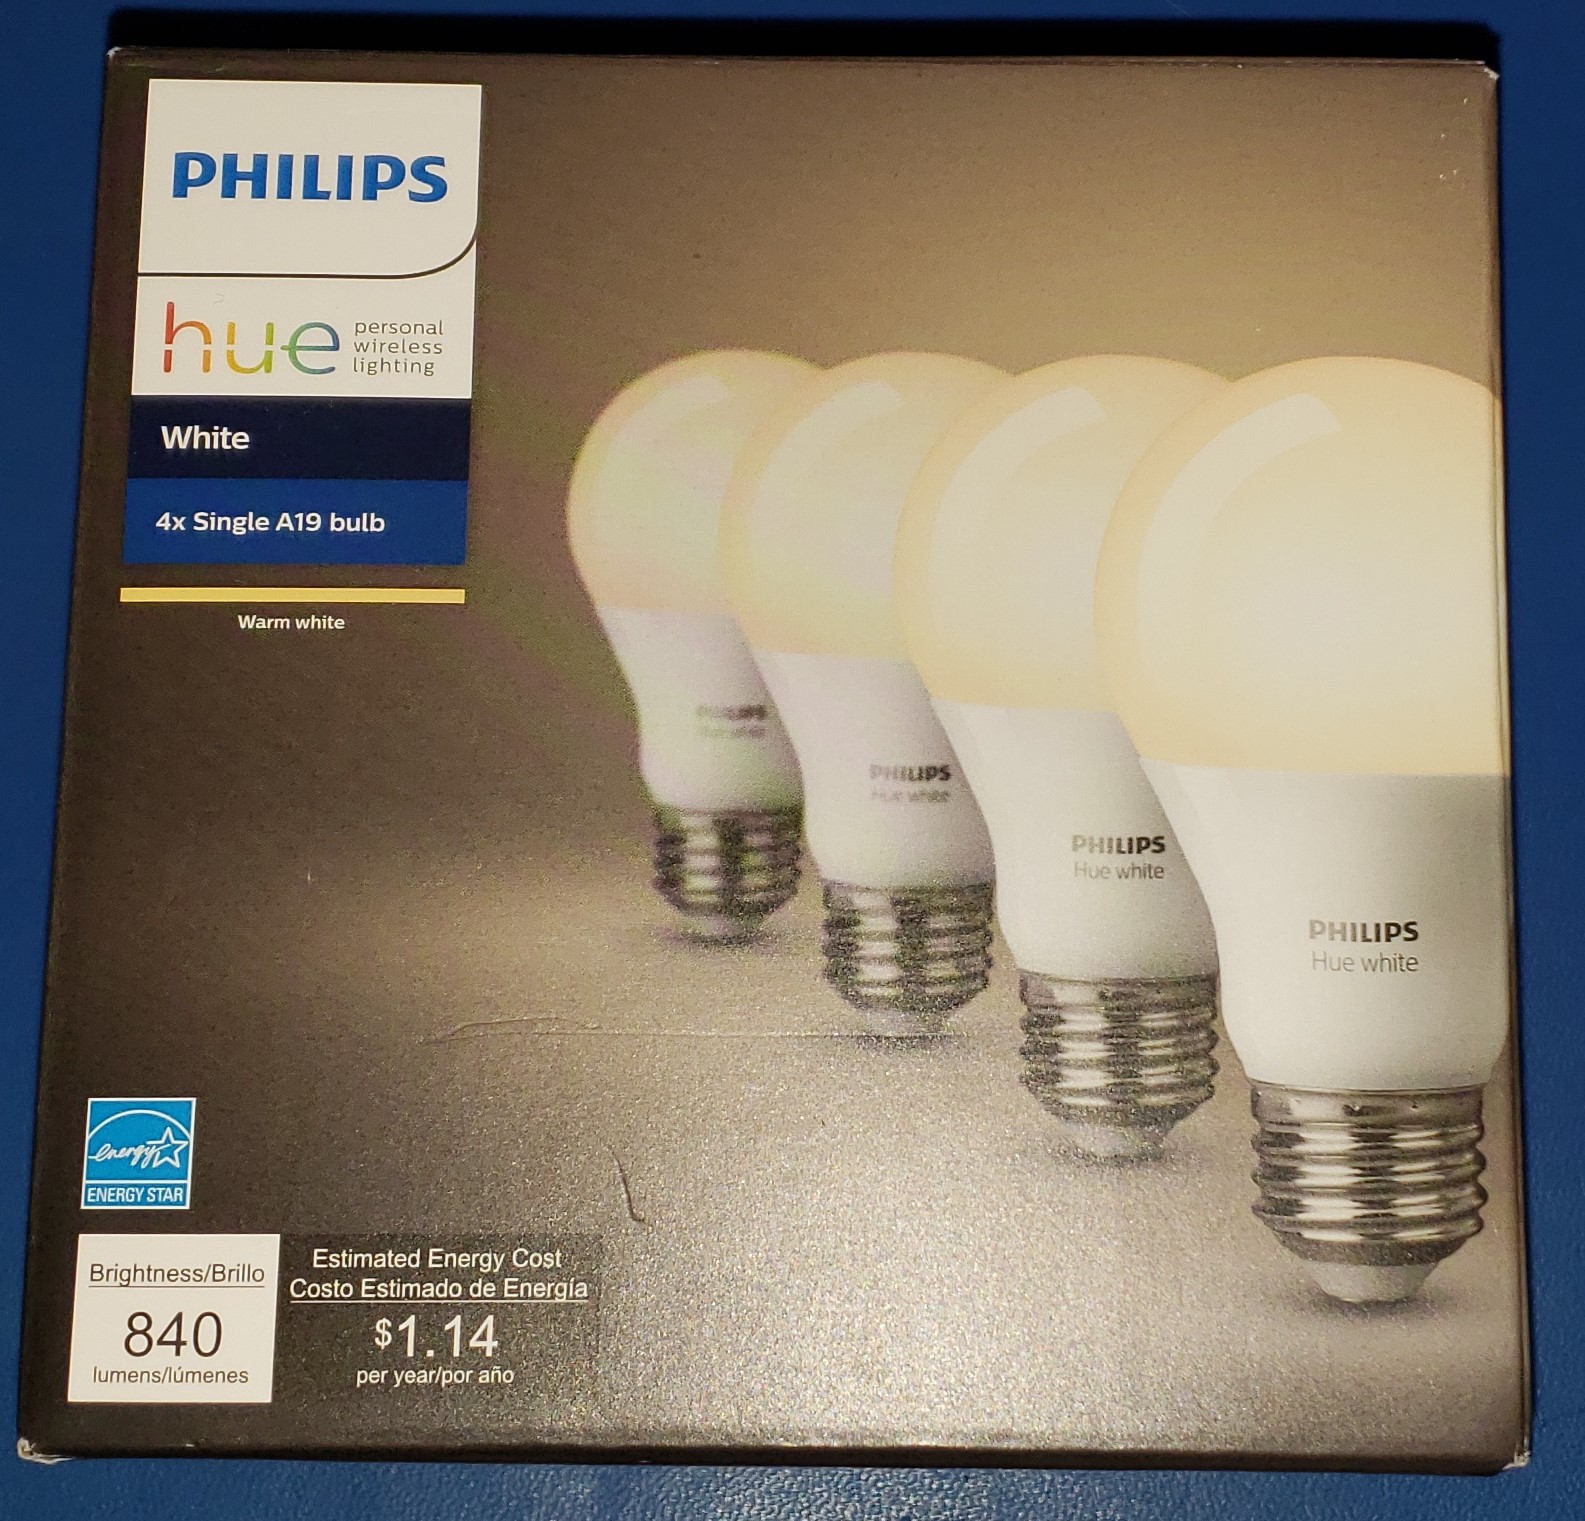 Setting up Philips Hue Bridge and Light bulbs